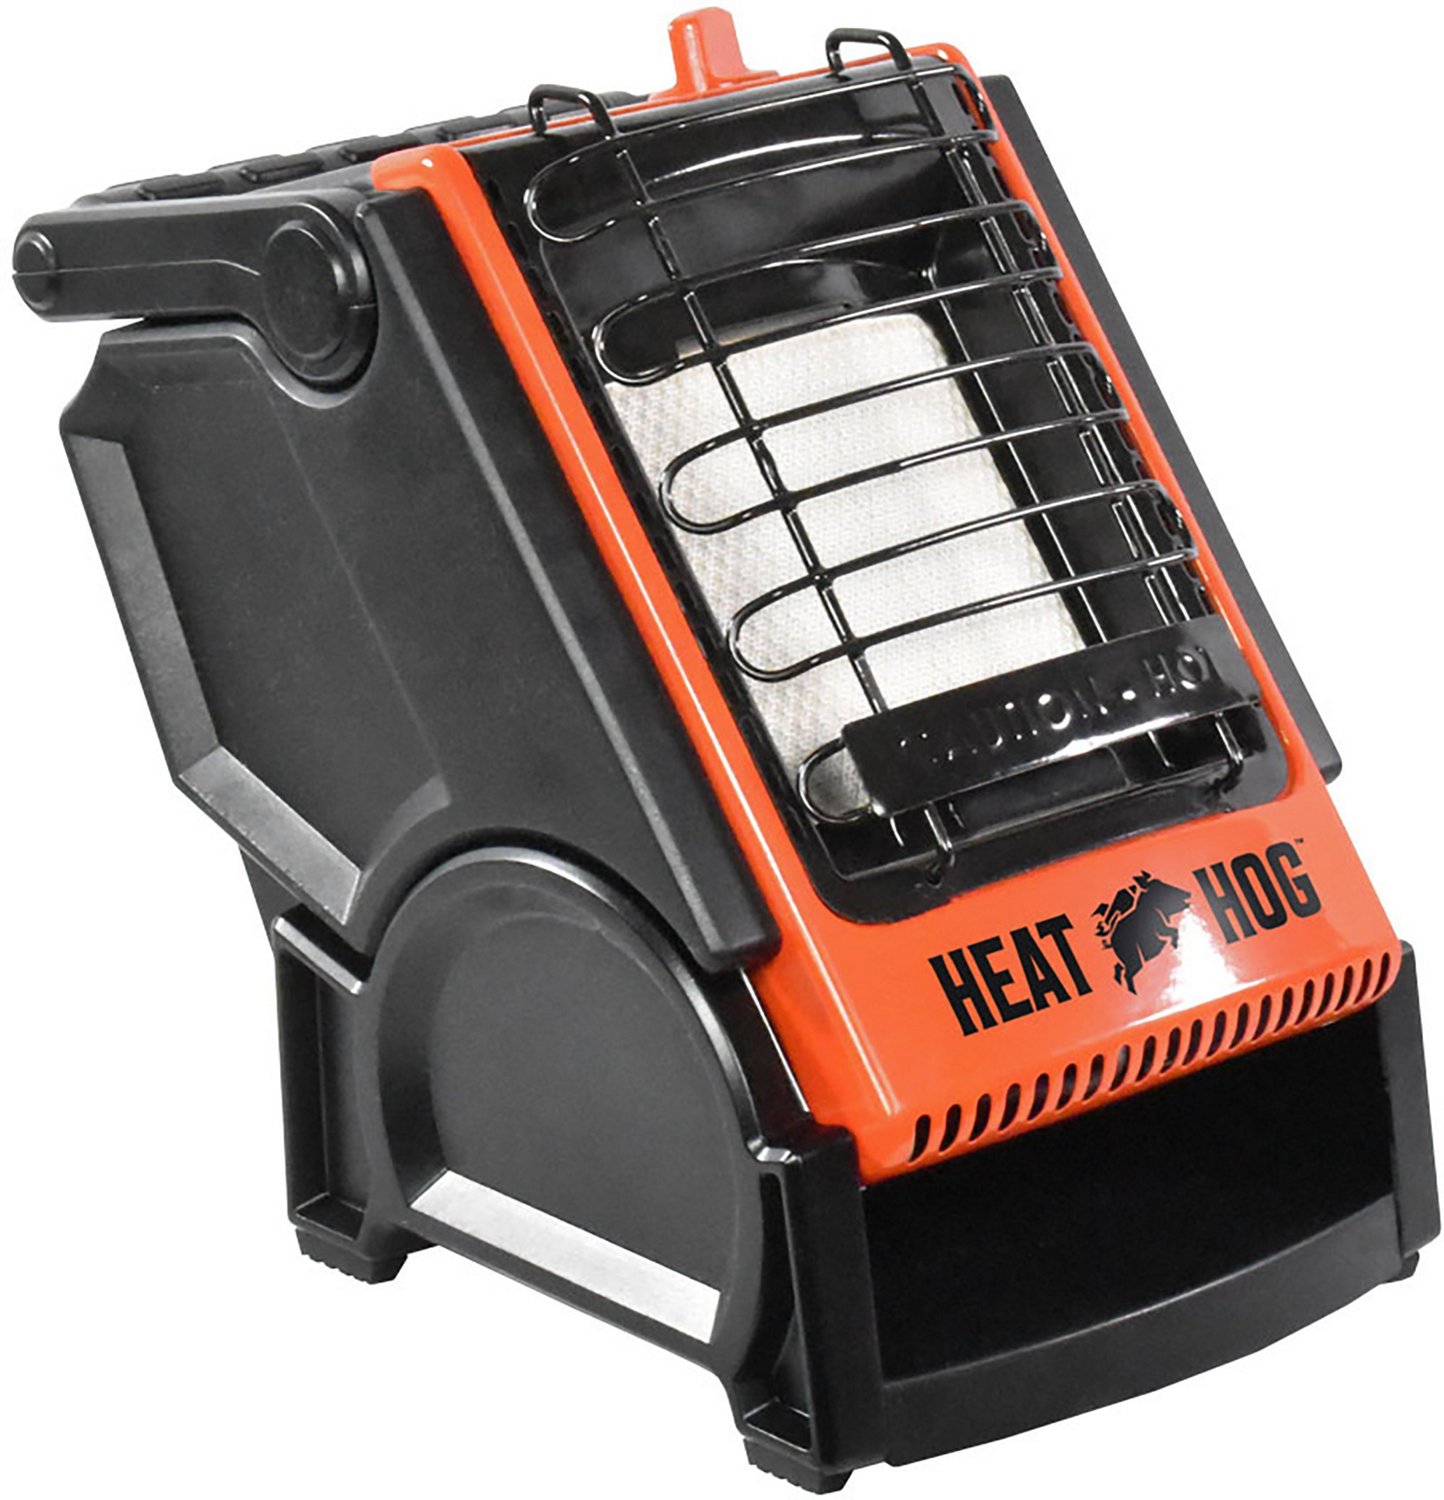 Heat Hog 9,000 BTU Portable Heater Unit